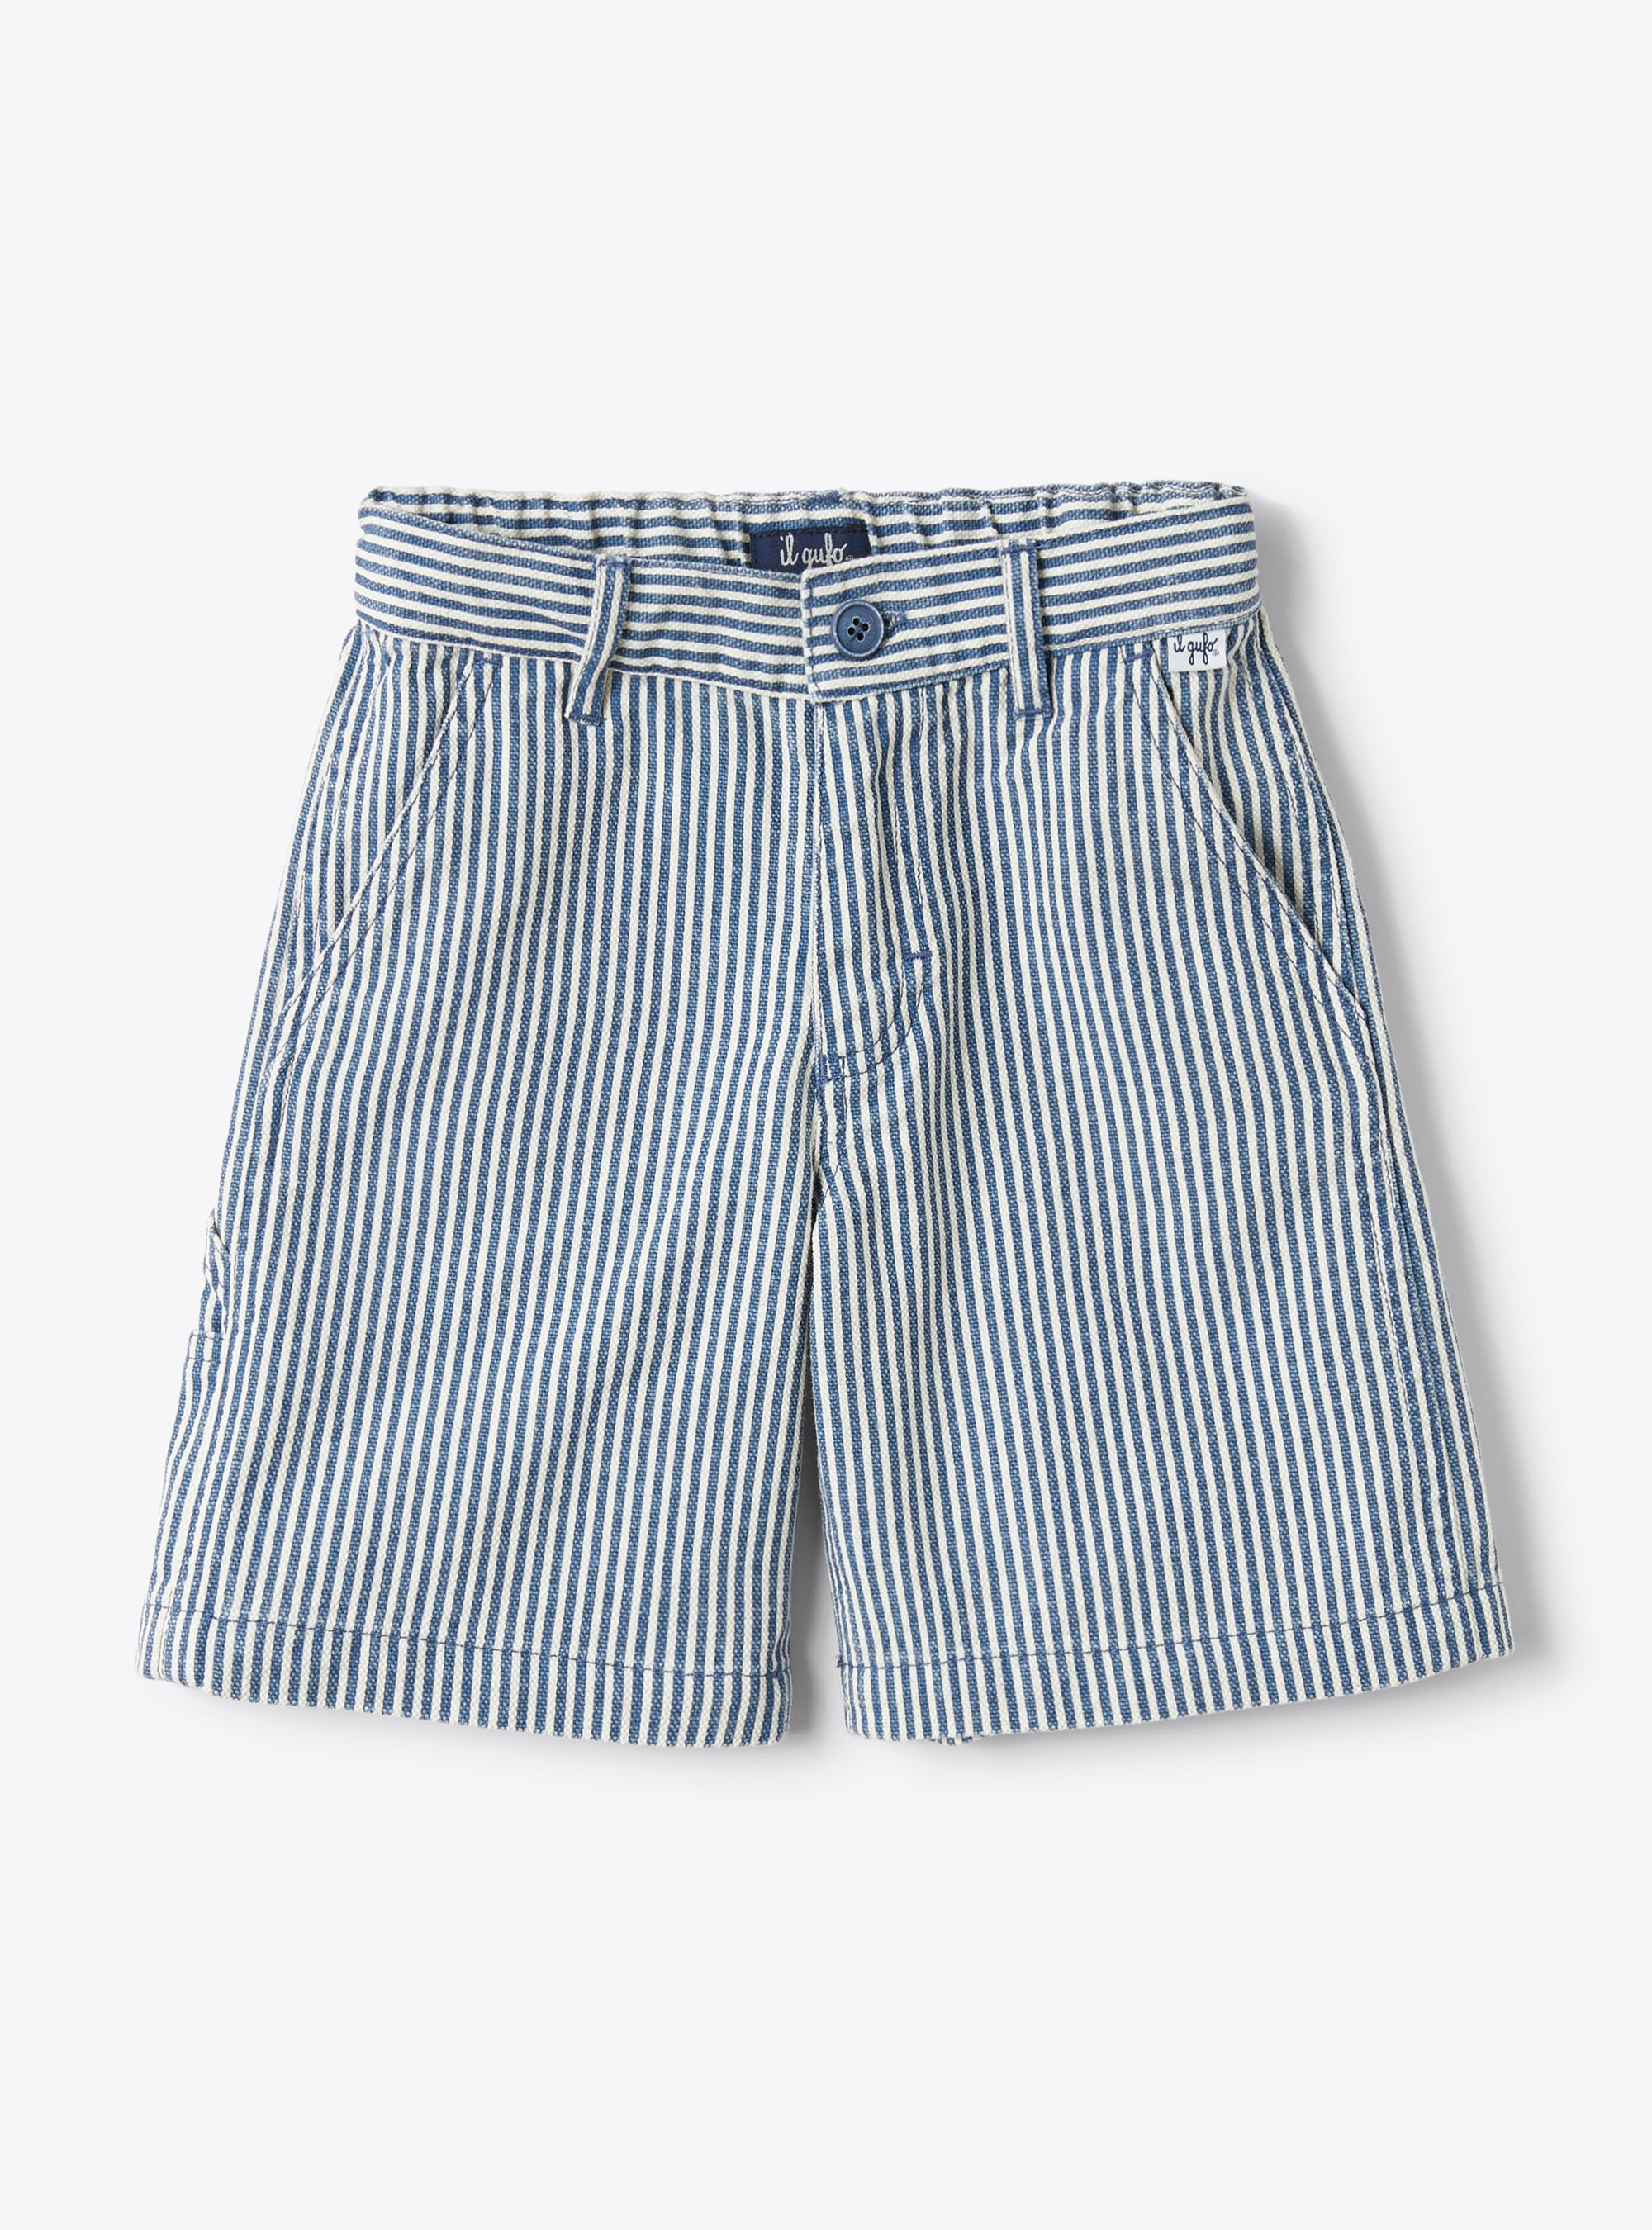 Bermuda shorts in a stripe pattern - Trousers - Il Gufo